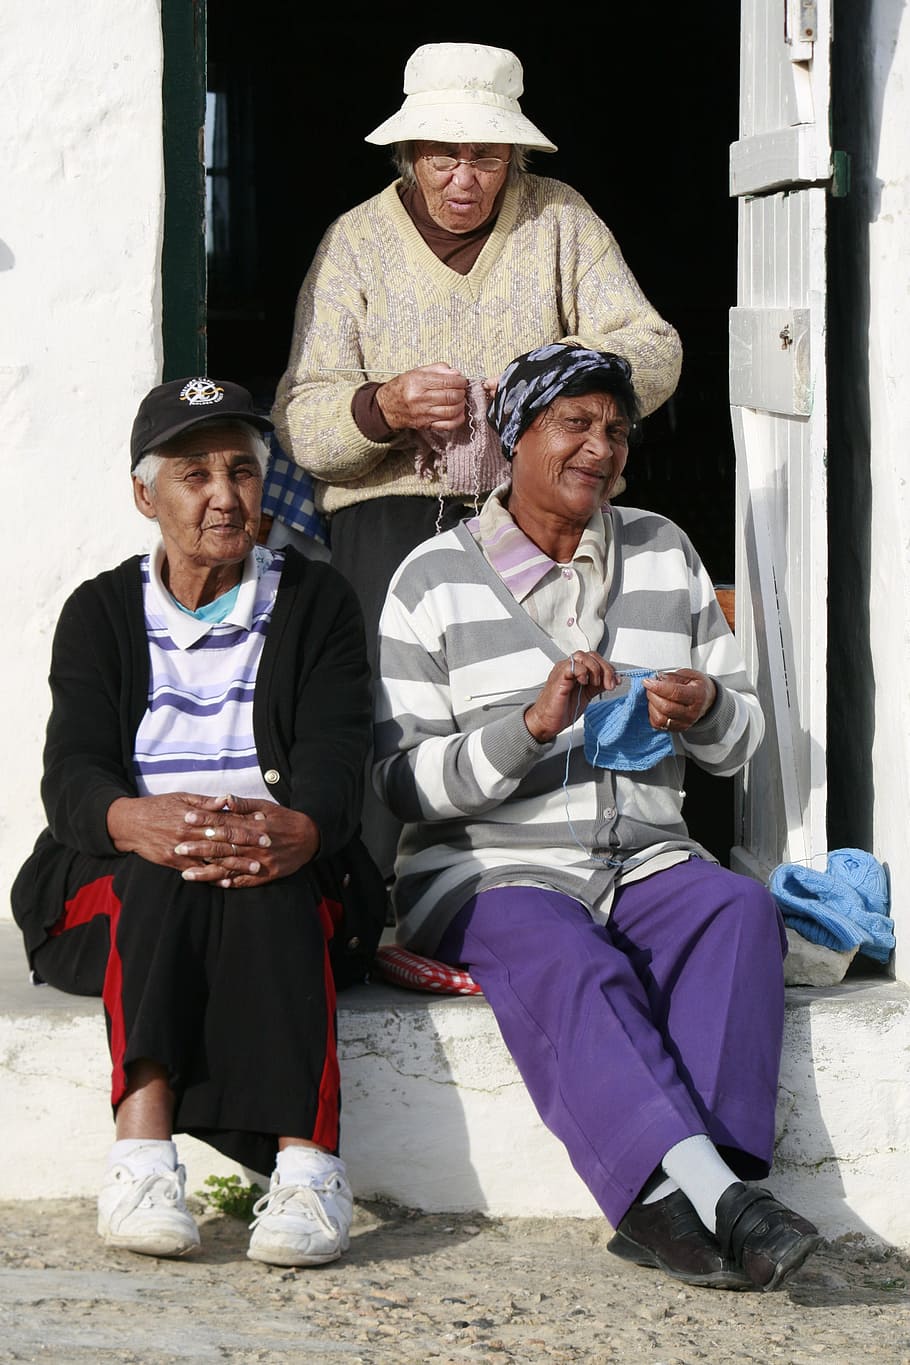 Arniston, Fishing Village, Old, Ladies, old ladies, knitting, outdoors, retired, hobby, people